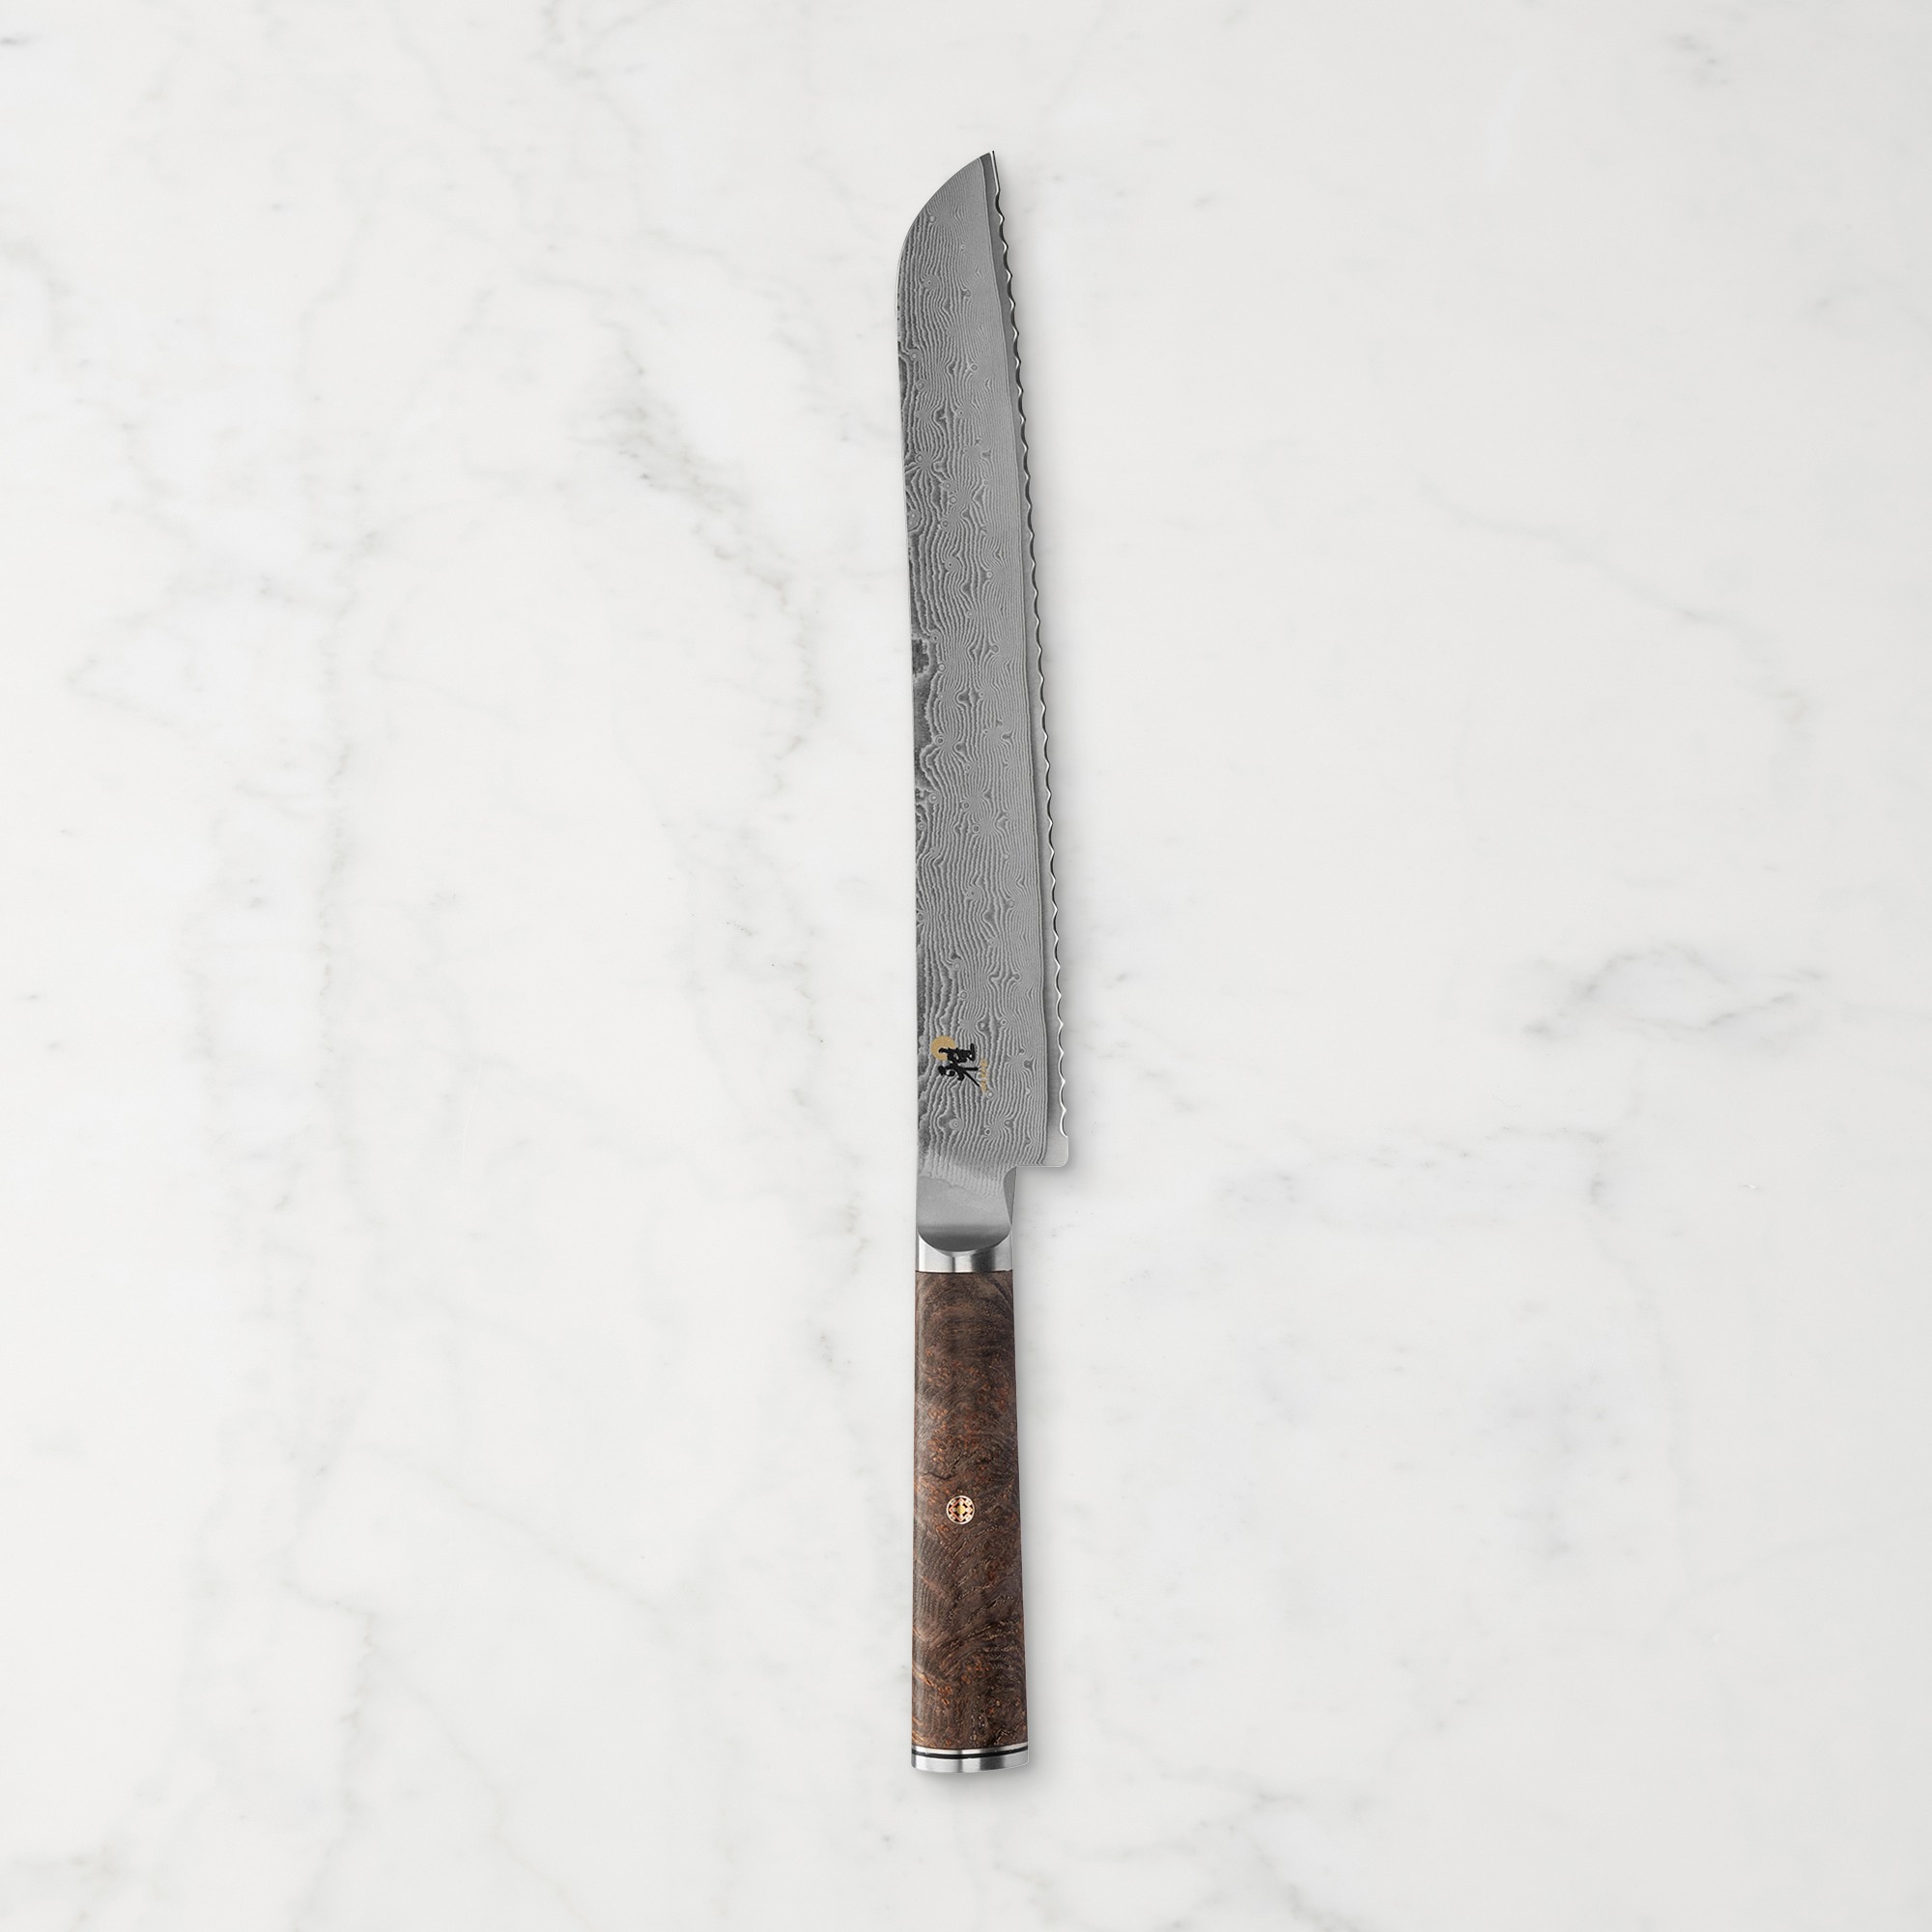 Miyabi Black Bread Knife, 9 1/2"